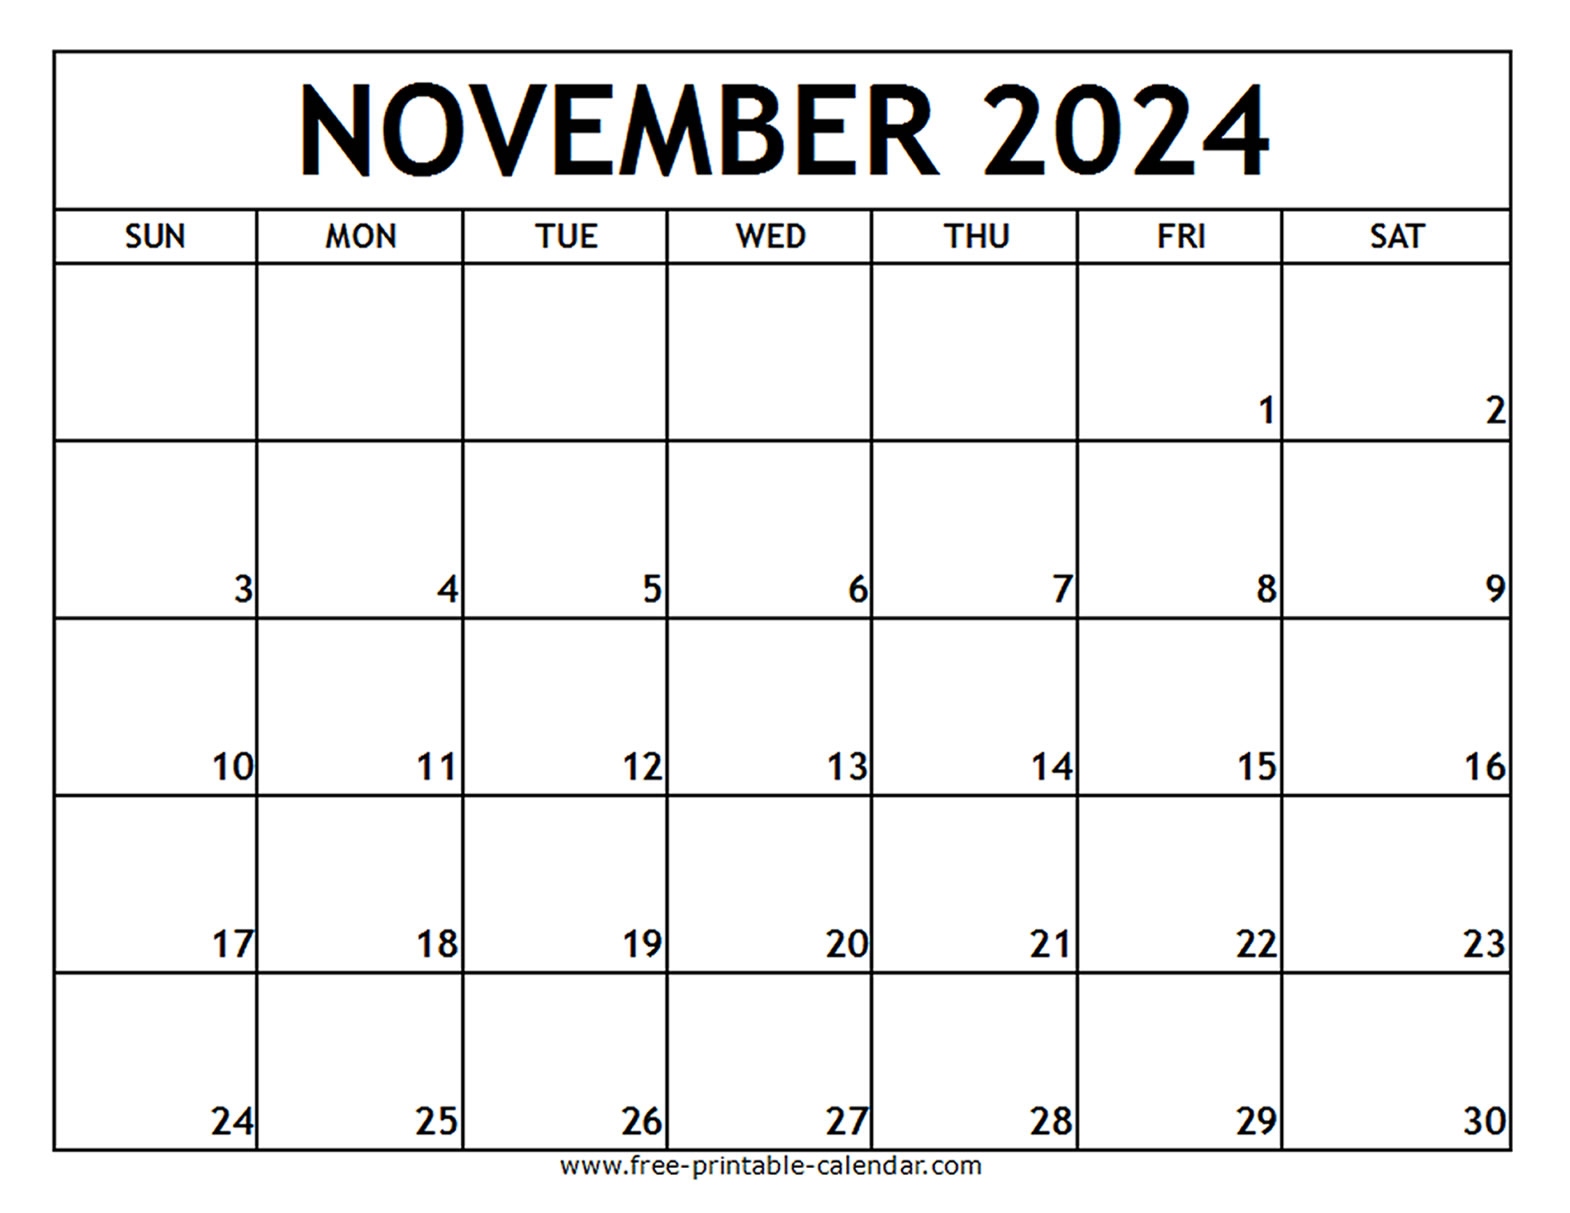 November 2024 Printable Calendar - Free-Printable-Calendar inside Free Printable Calendar 2024 November